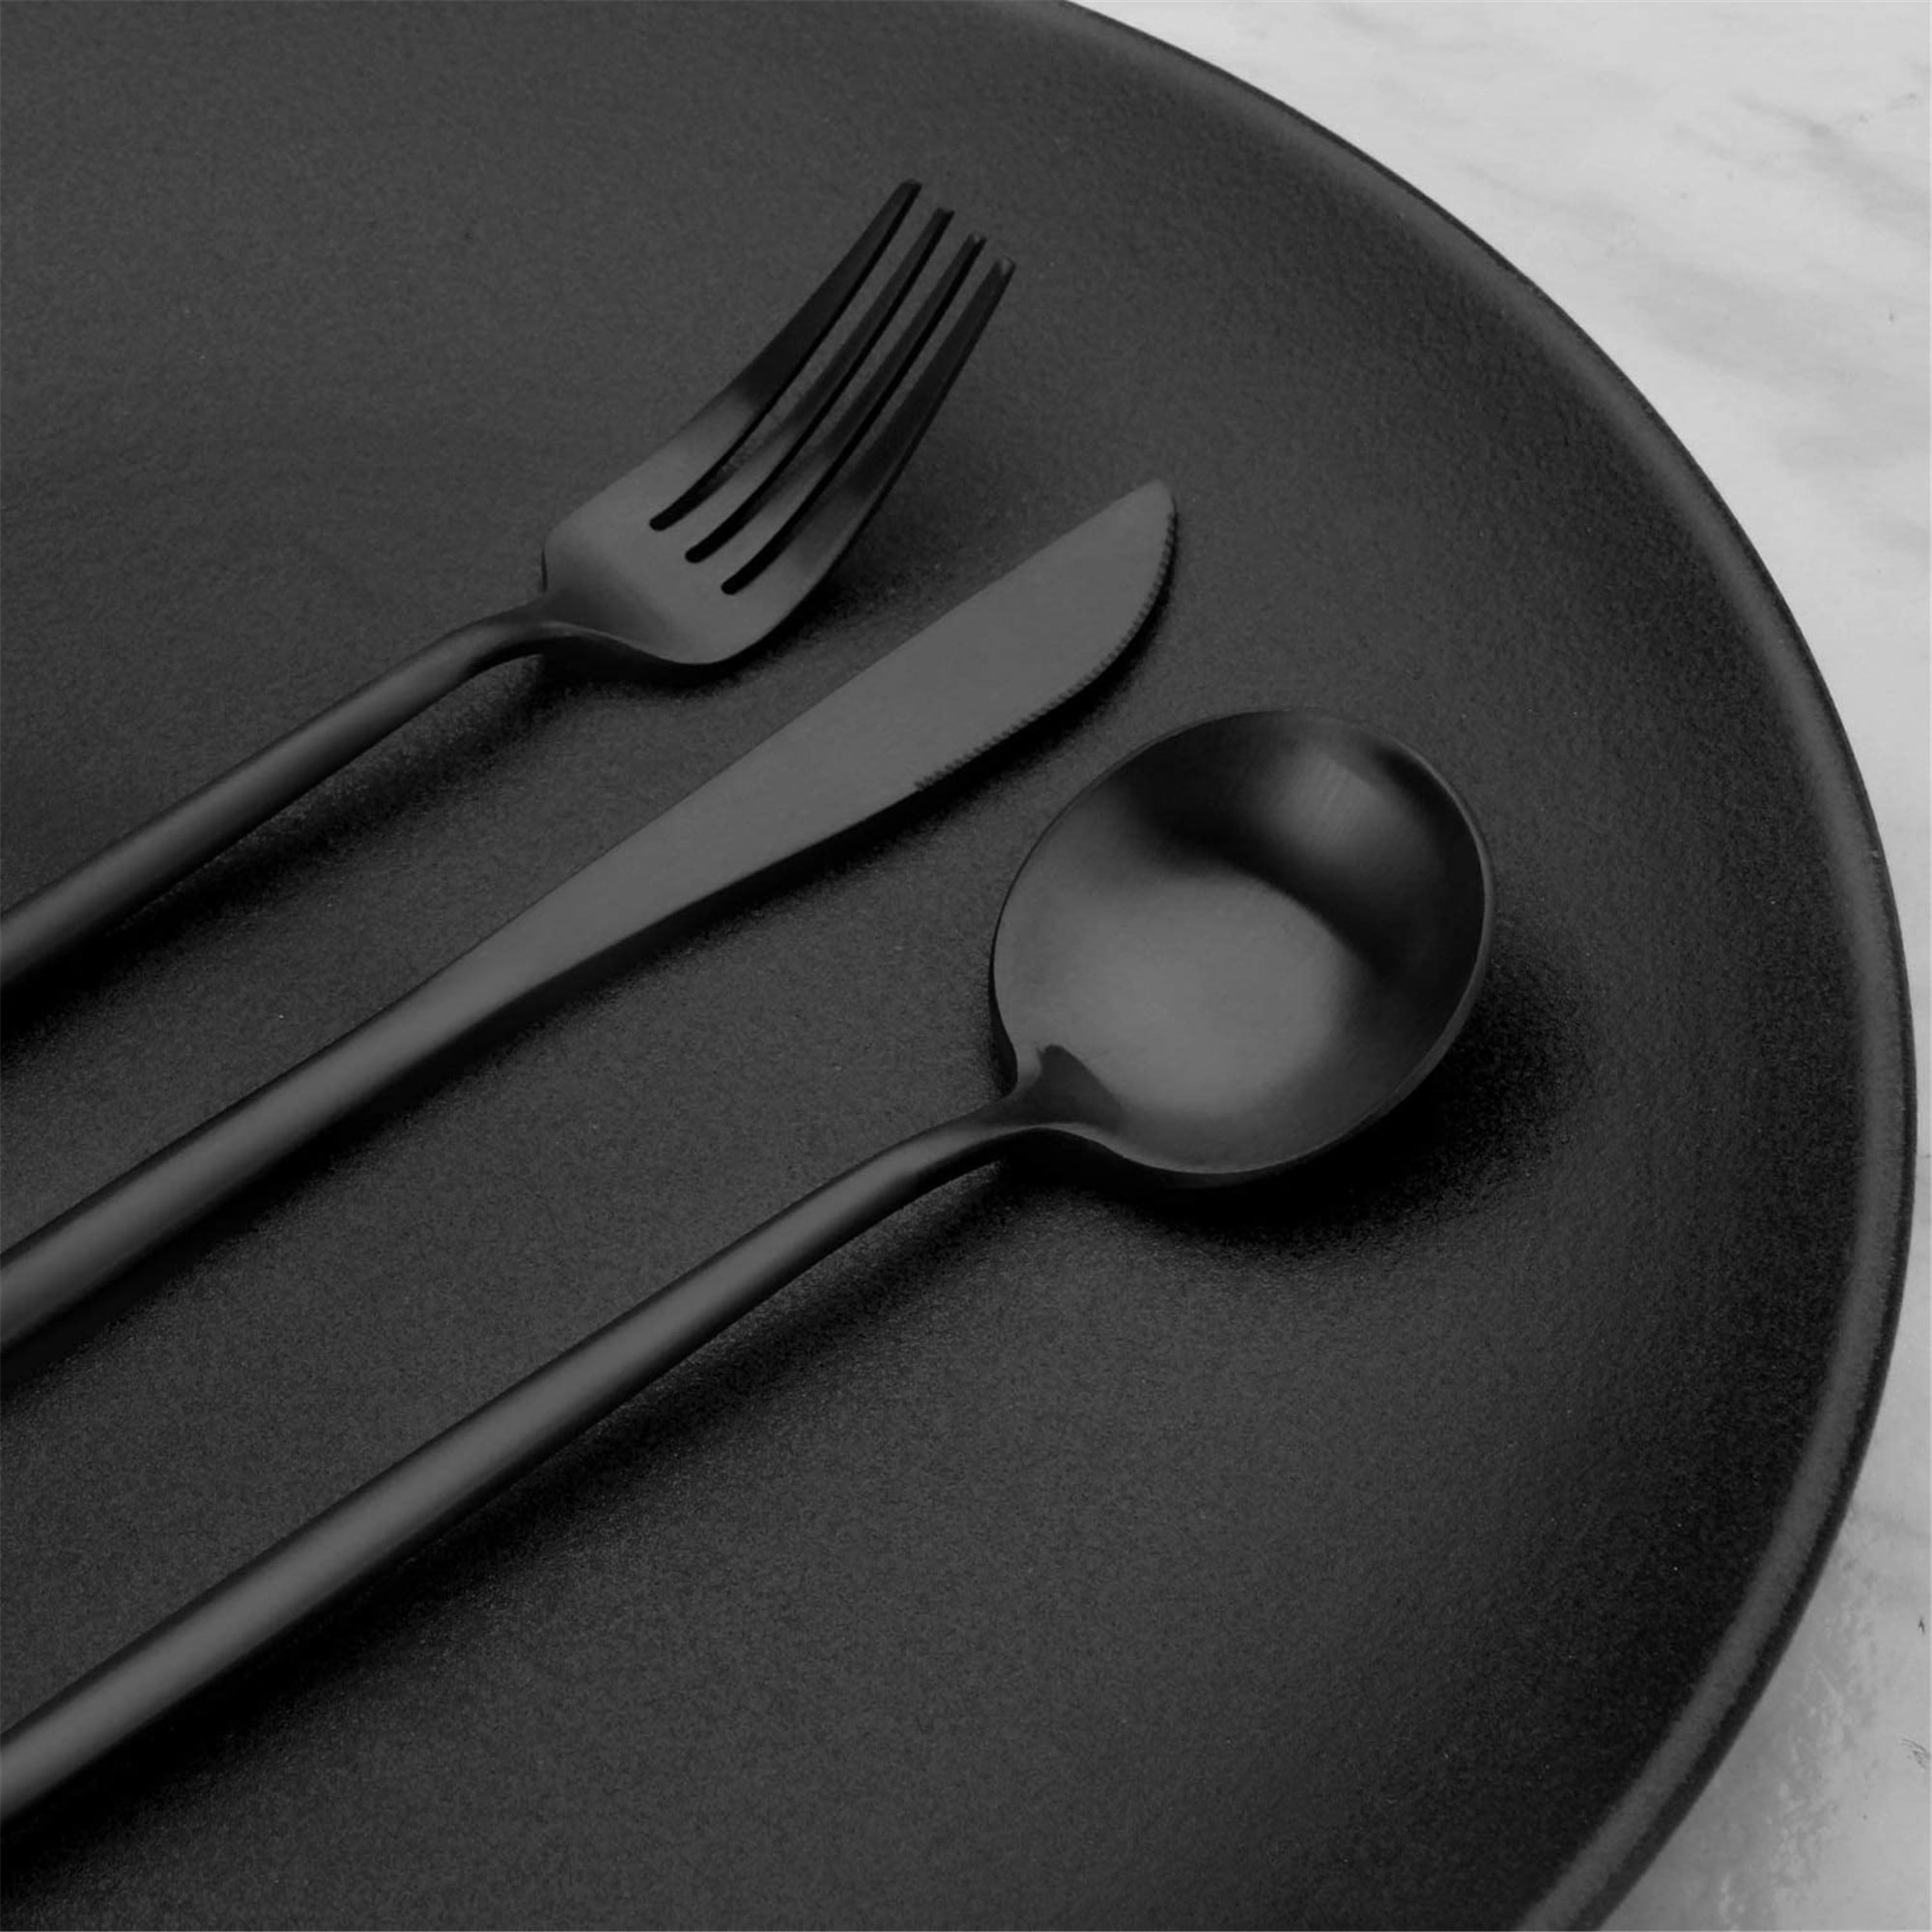 Black Silverware Set Colorful Stainless Steel flatware Dinnerware Set,black  Tableware Set for 4,Mirror Finish Black Cutlery Set - Bed Bath & Beyond -  33167883